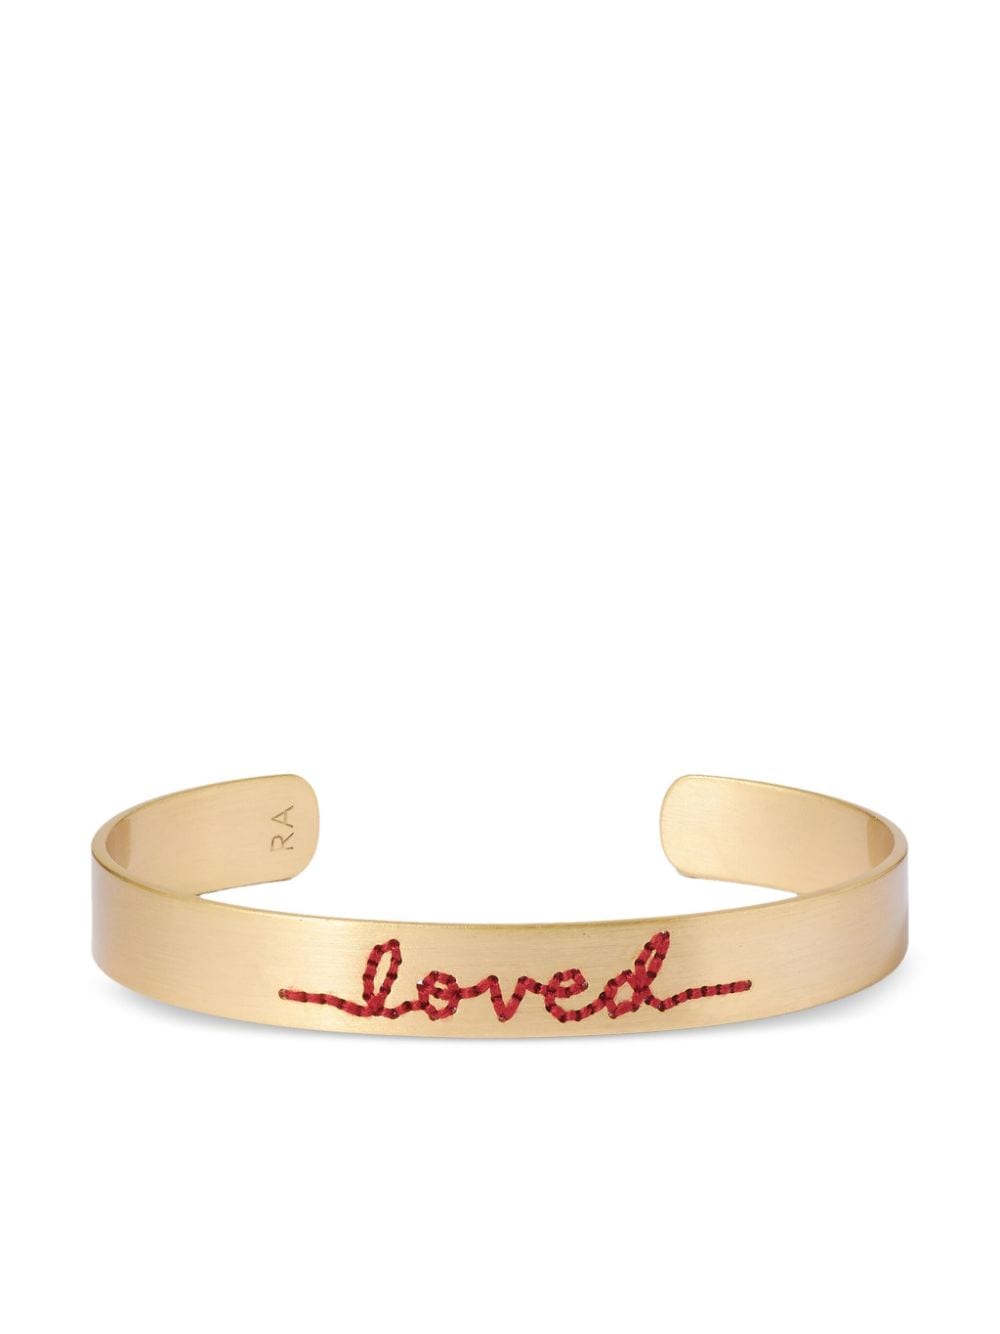 Roxanne Assoulin Loved Stitched Cuff Bracelet In Gold